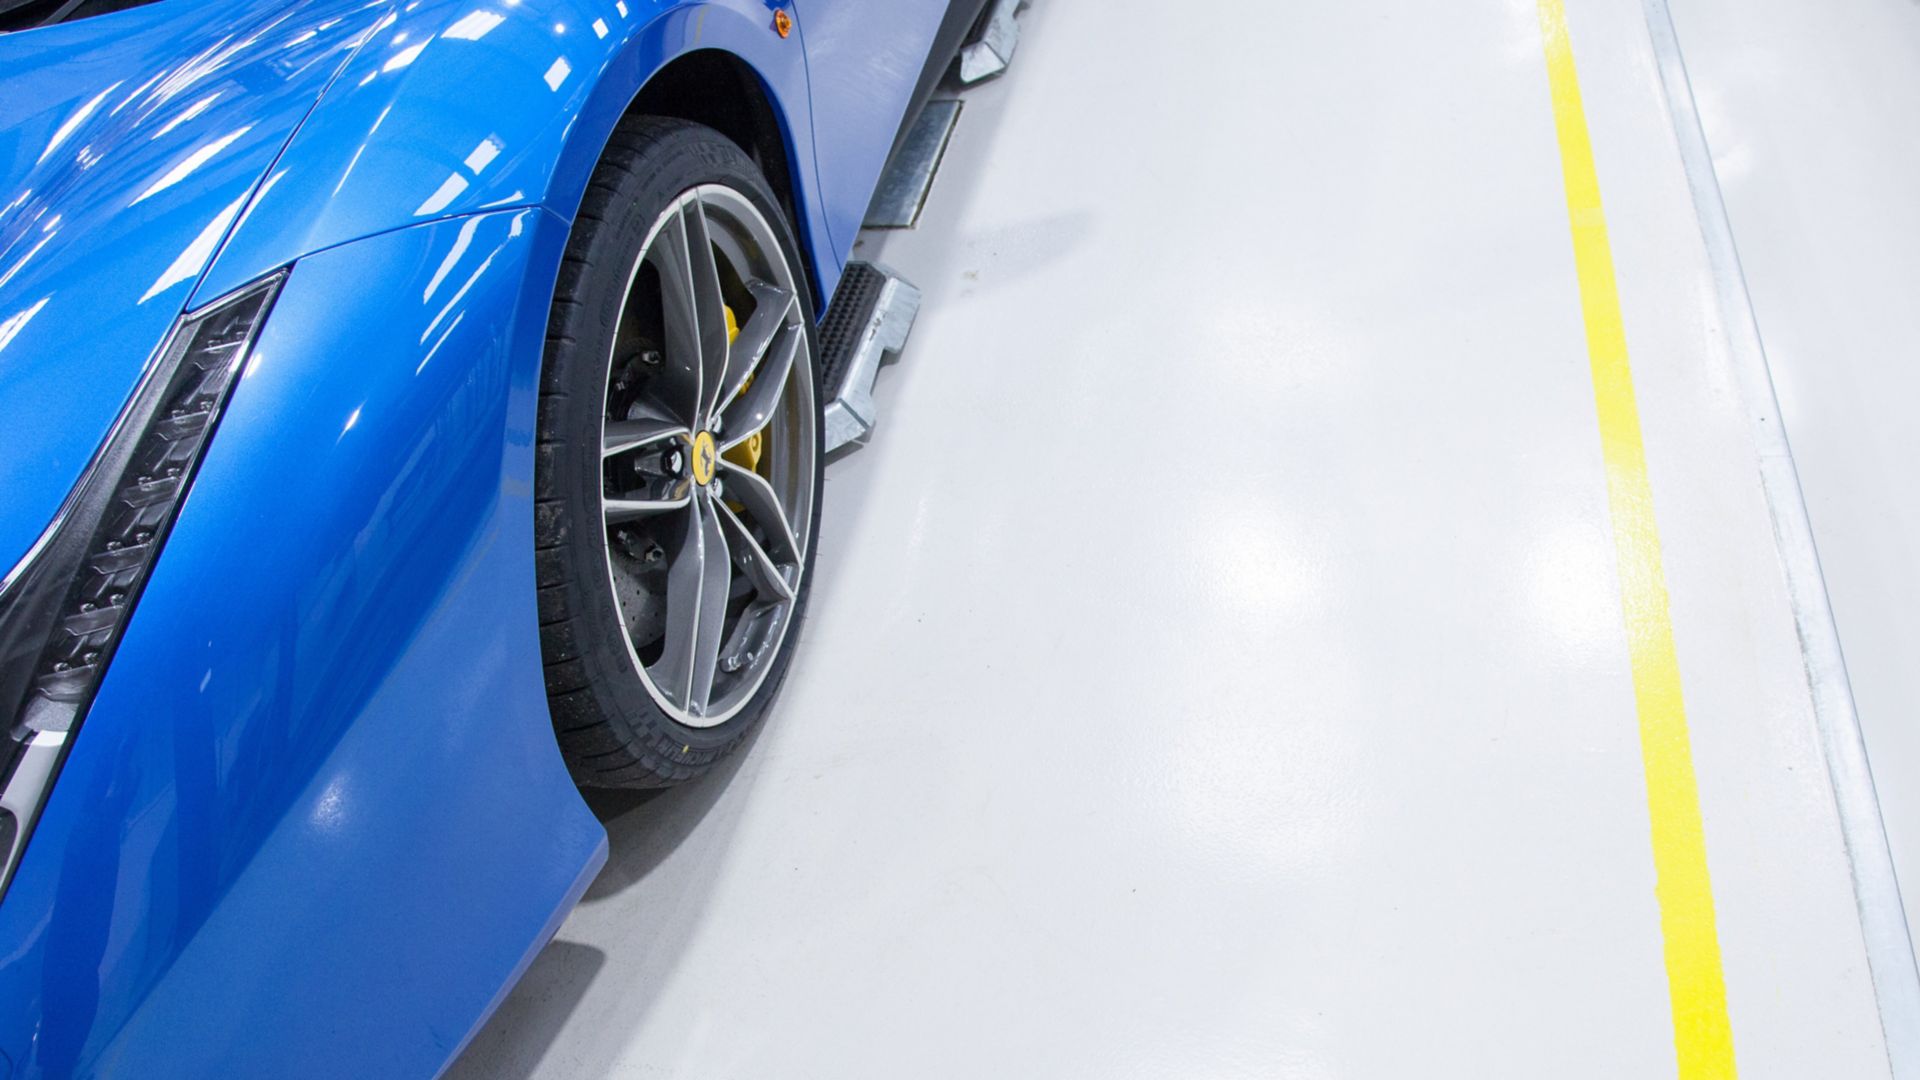 Blue Ferrari car on high gloss Sikafloor surface